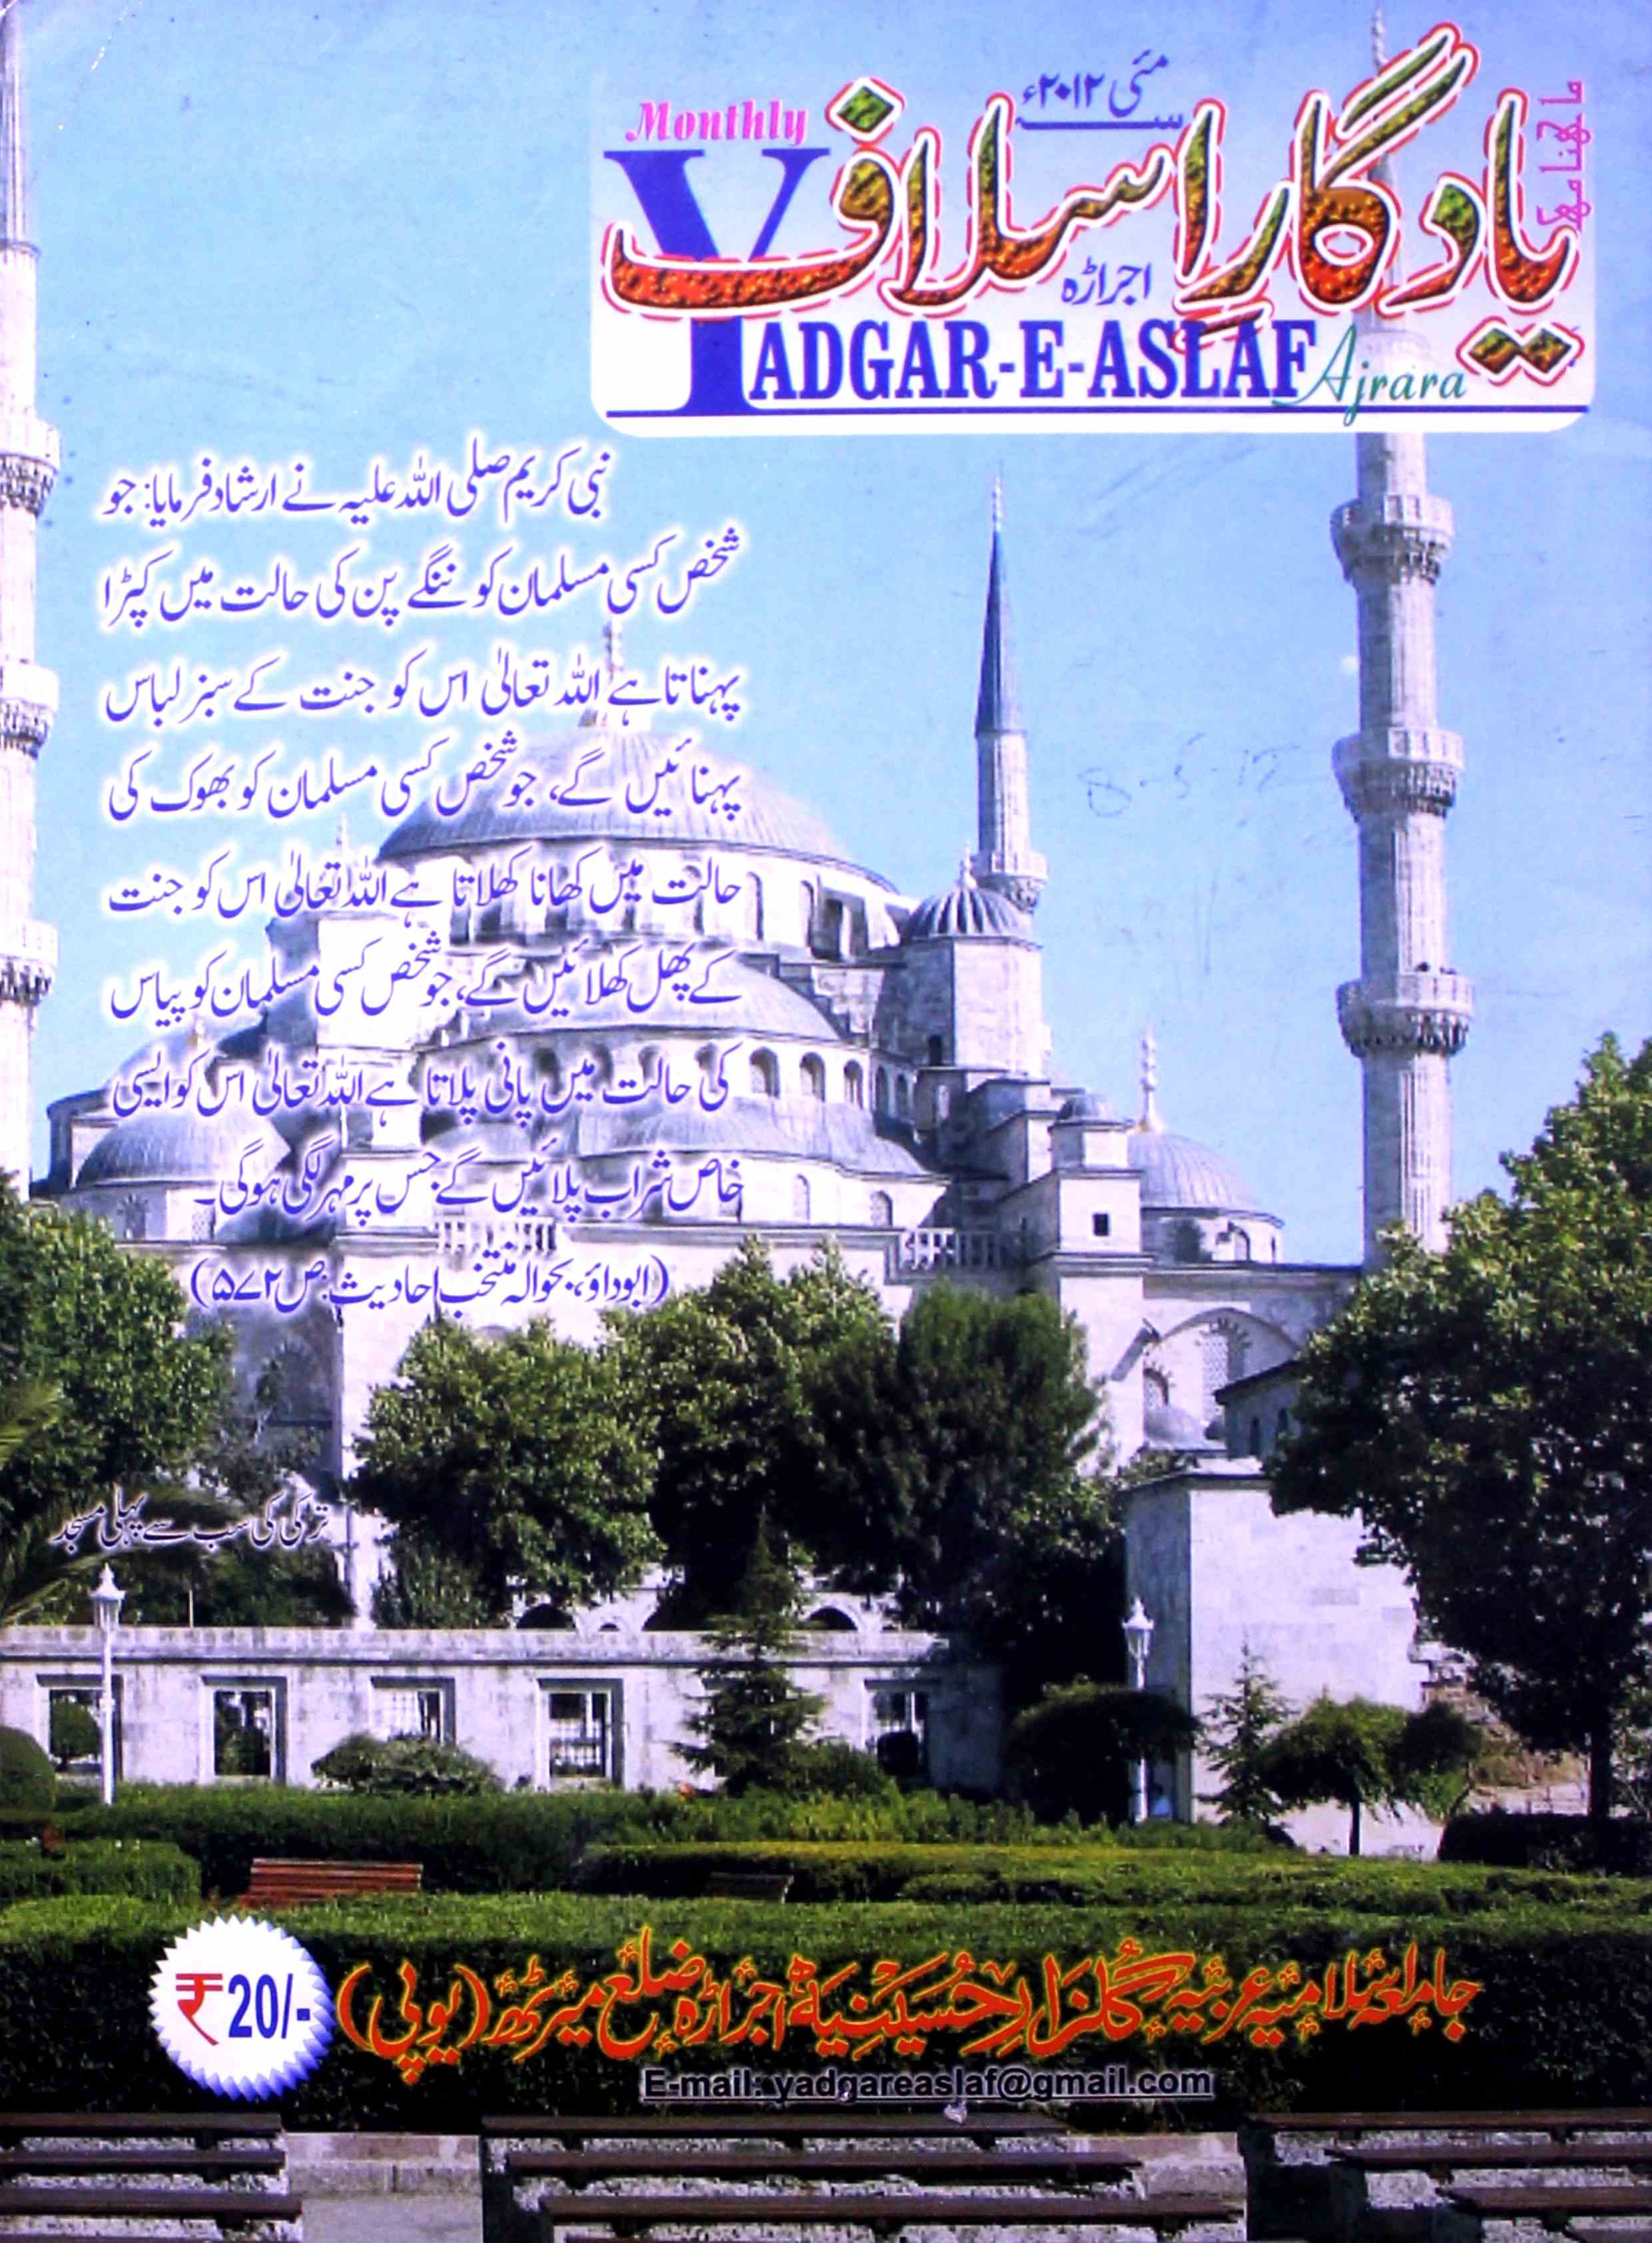 Yadgar-e-Aslaf